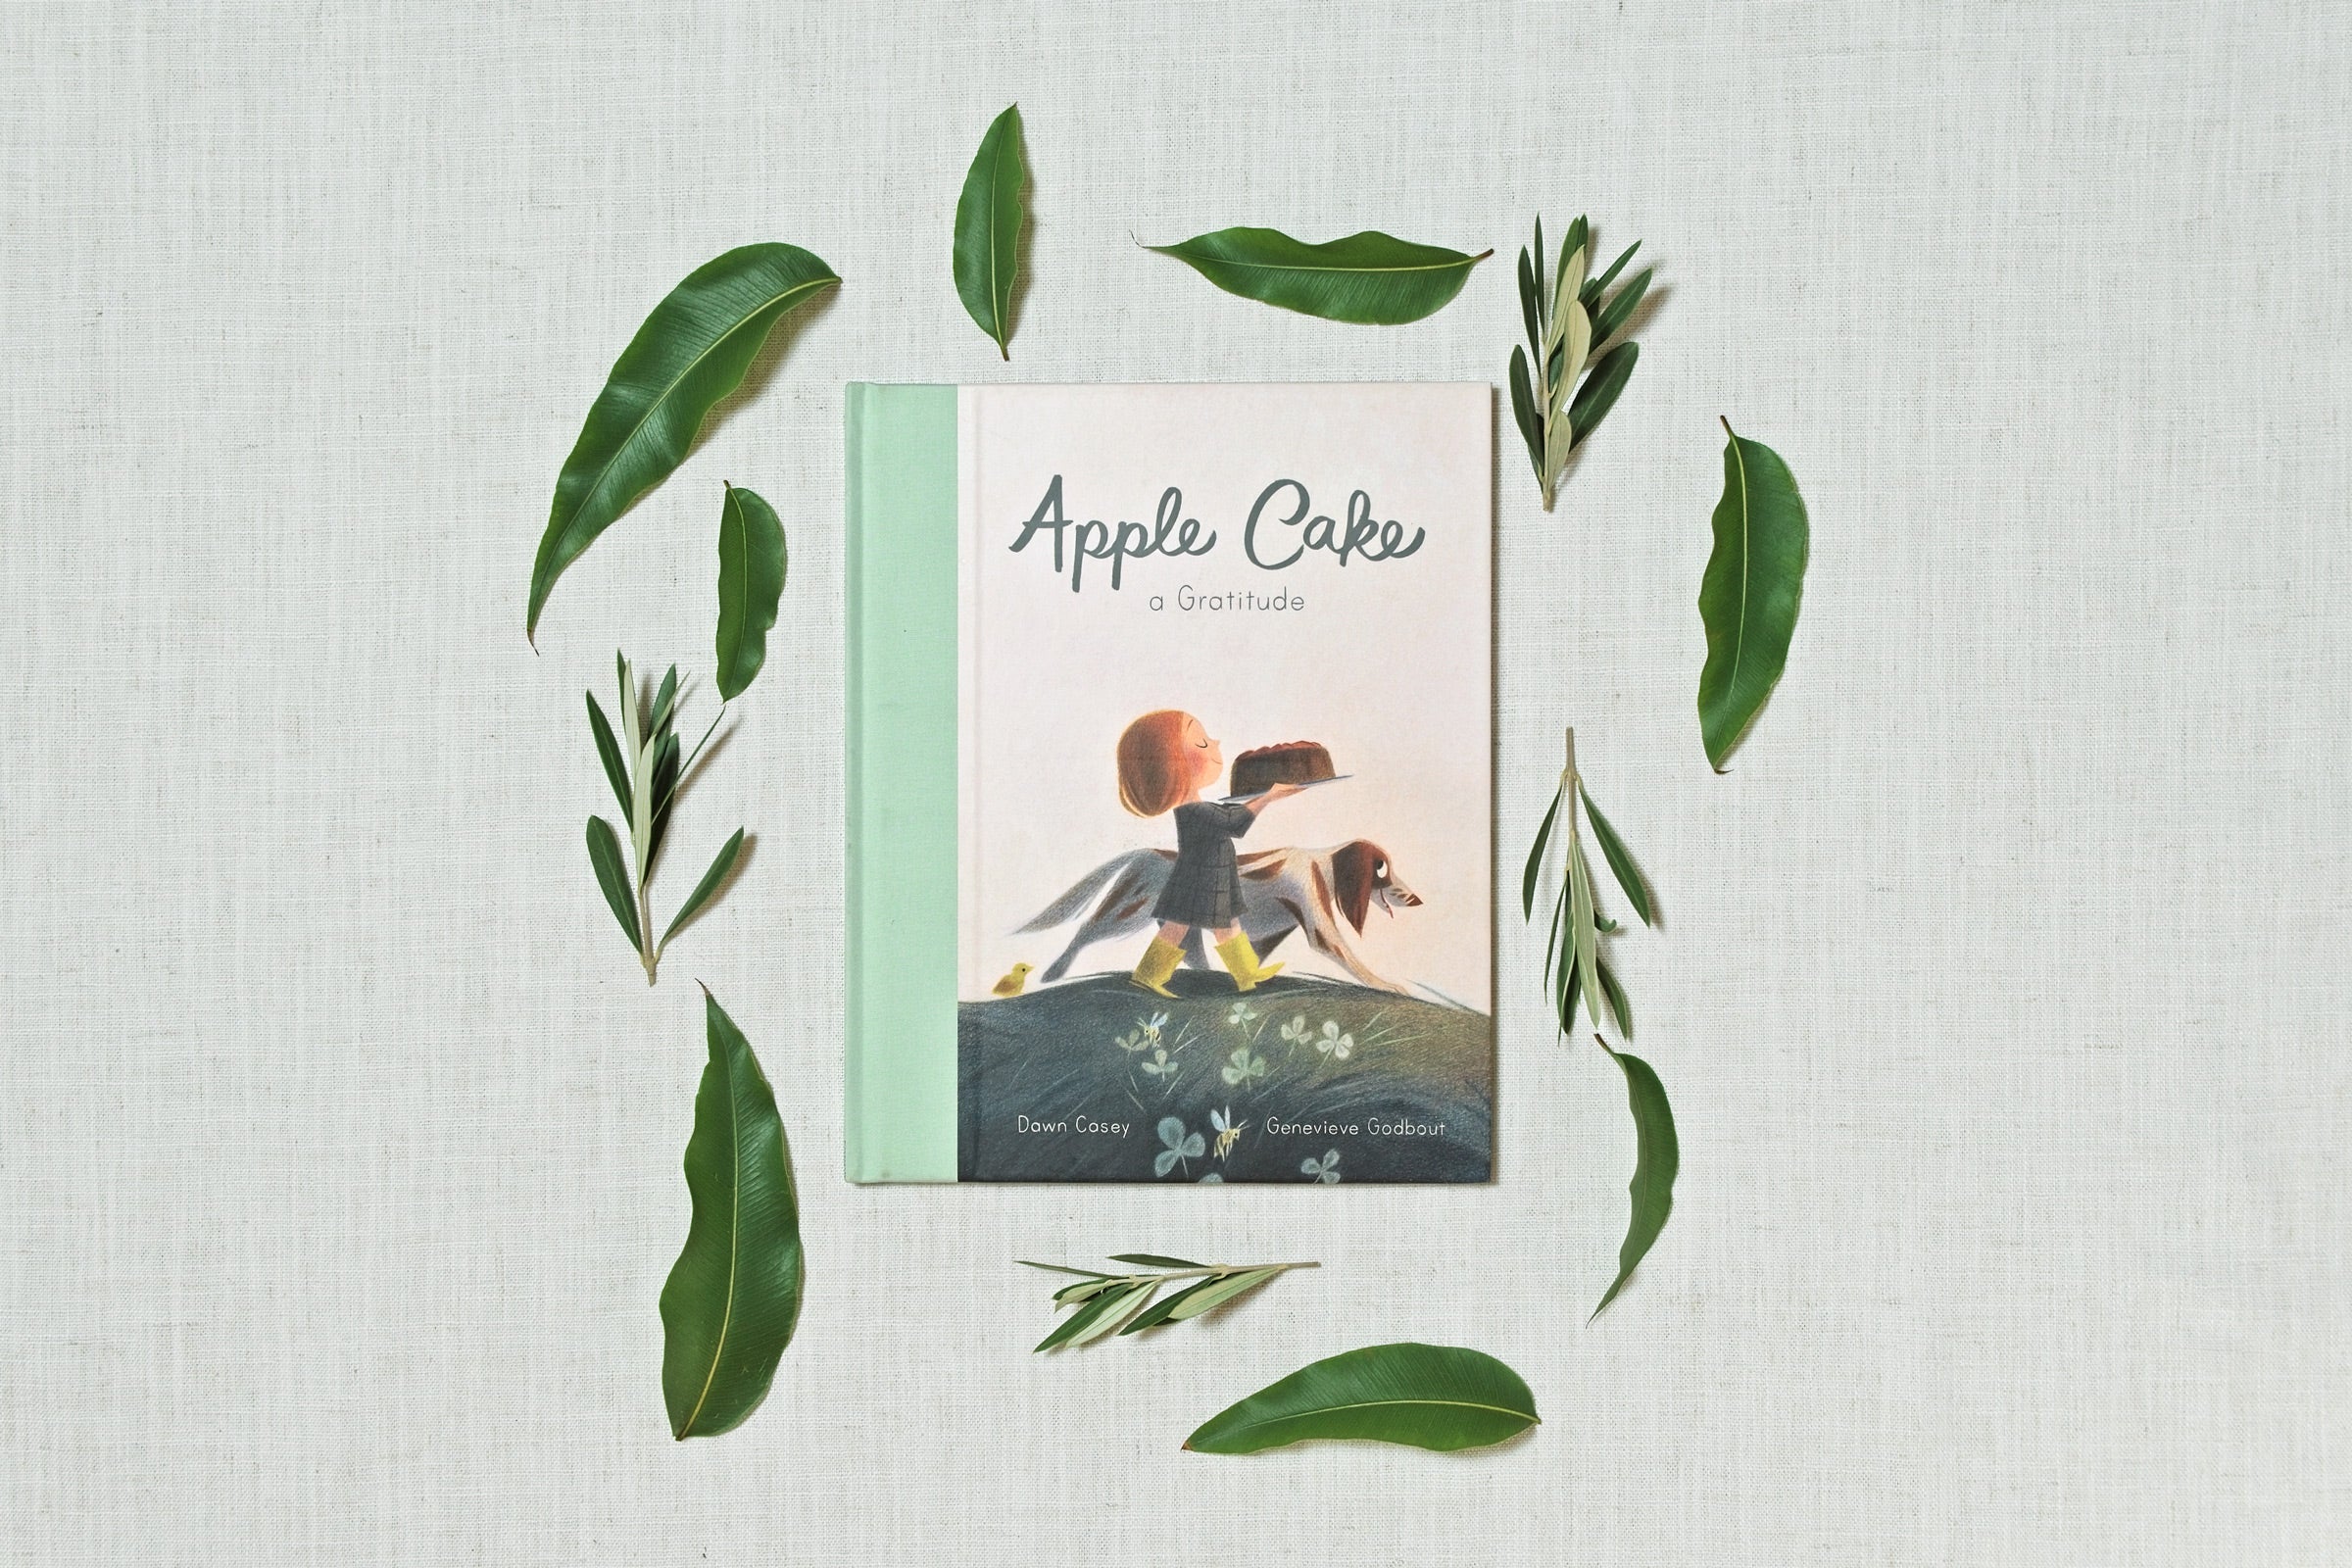 Apple Cake: A Gratitude – Little folks